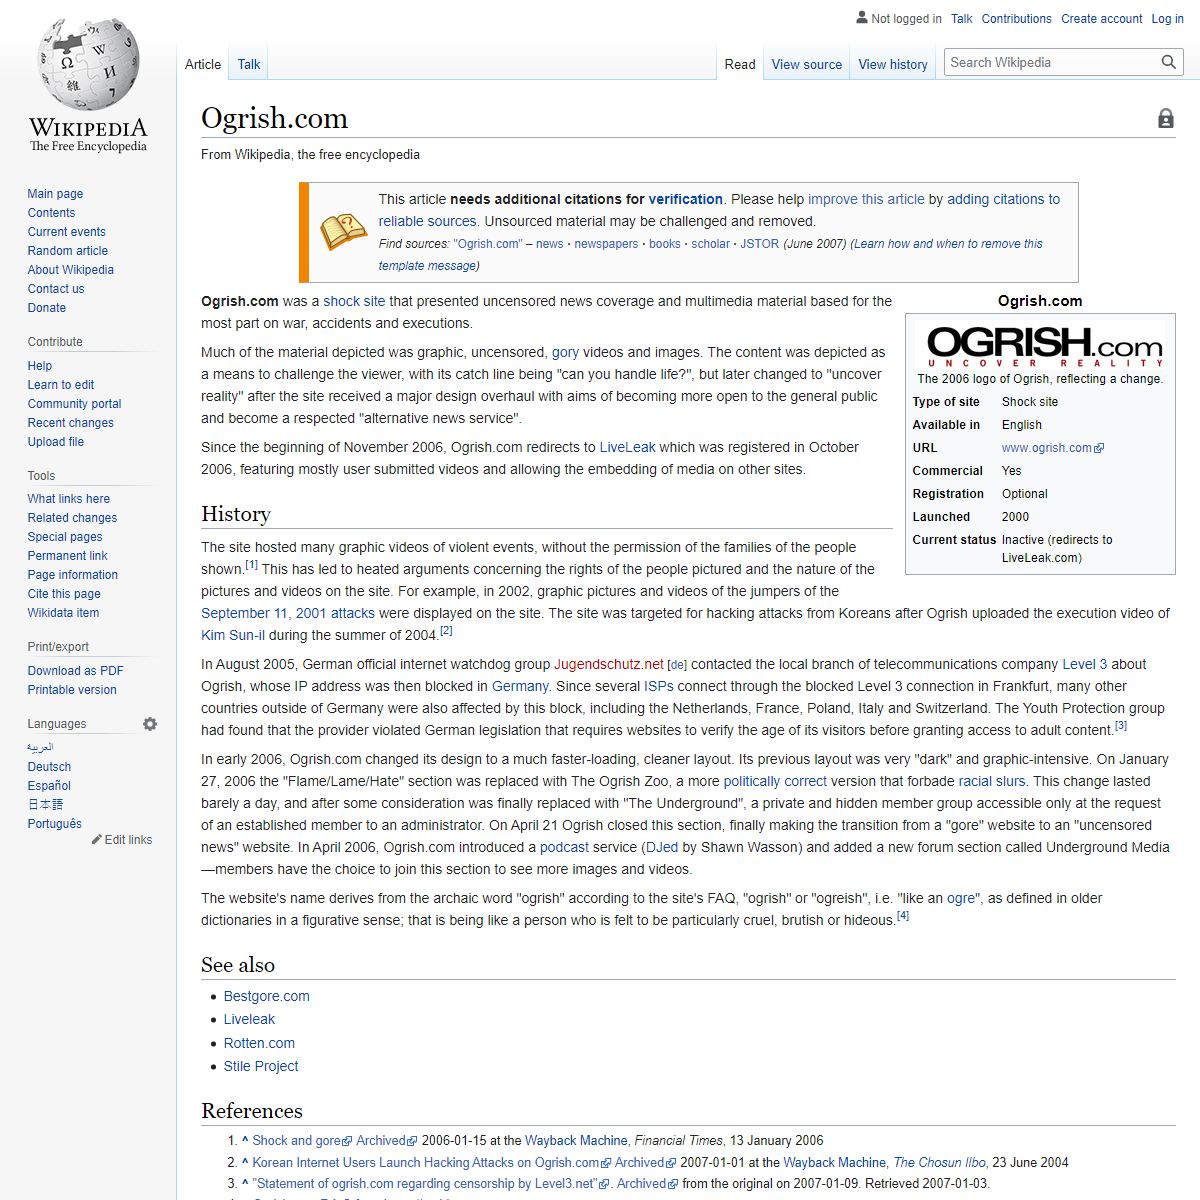 Ogrish.com - Wikipedia